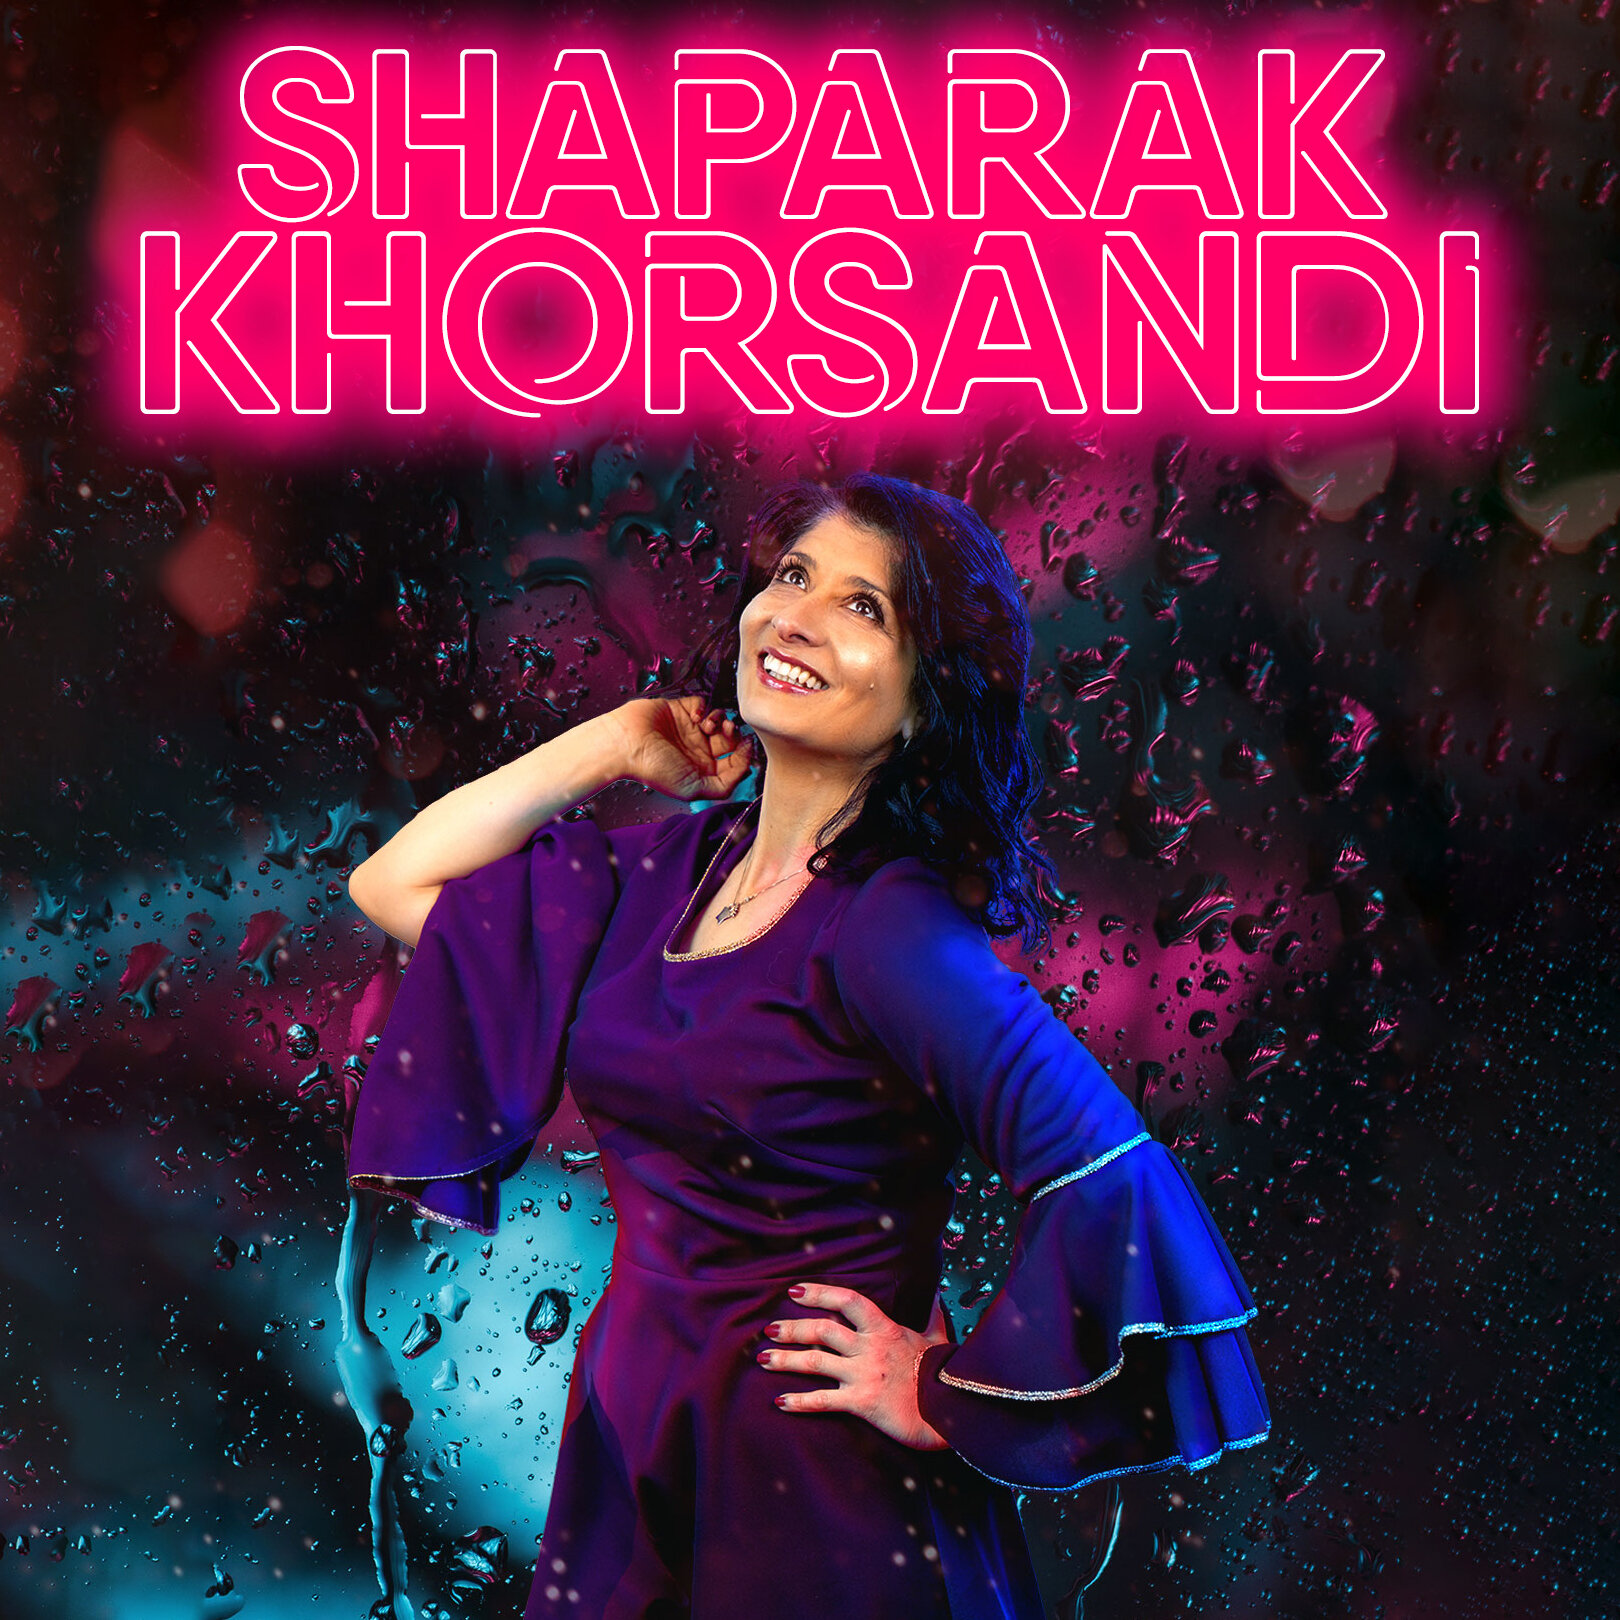 Shaparak Khorsandi: IT WAS THE 90s! : 5-10th